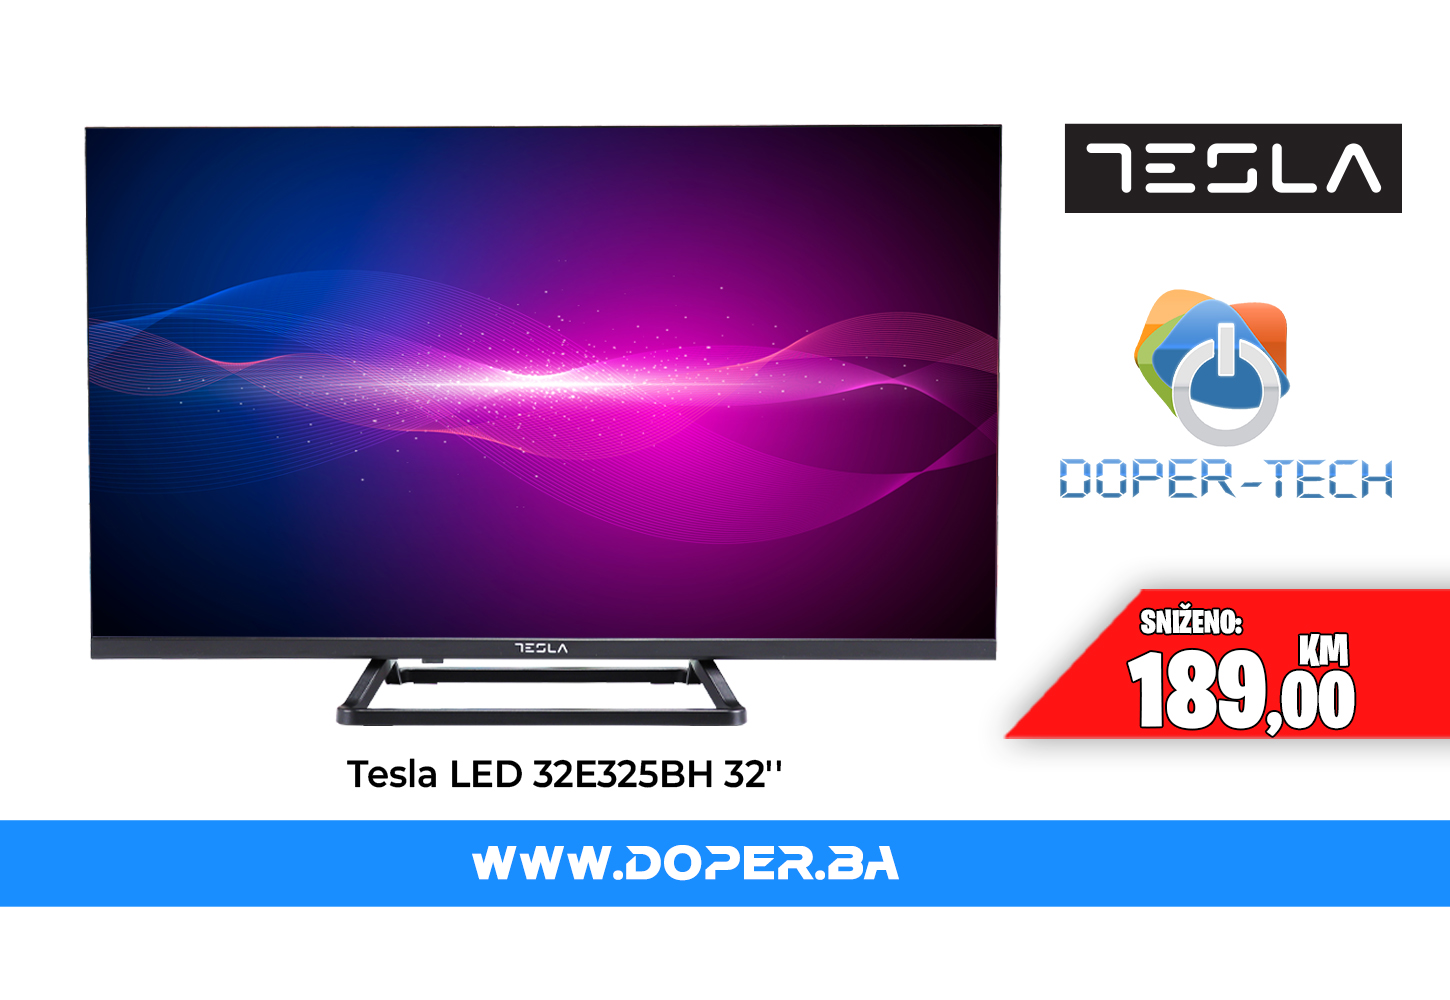 TV 40 TESLA Series 6 40E635BFS FHD LED Smart Android